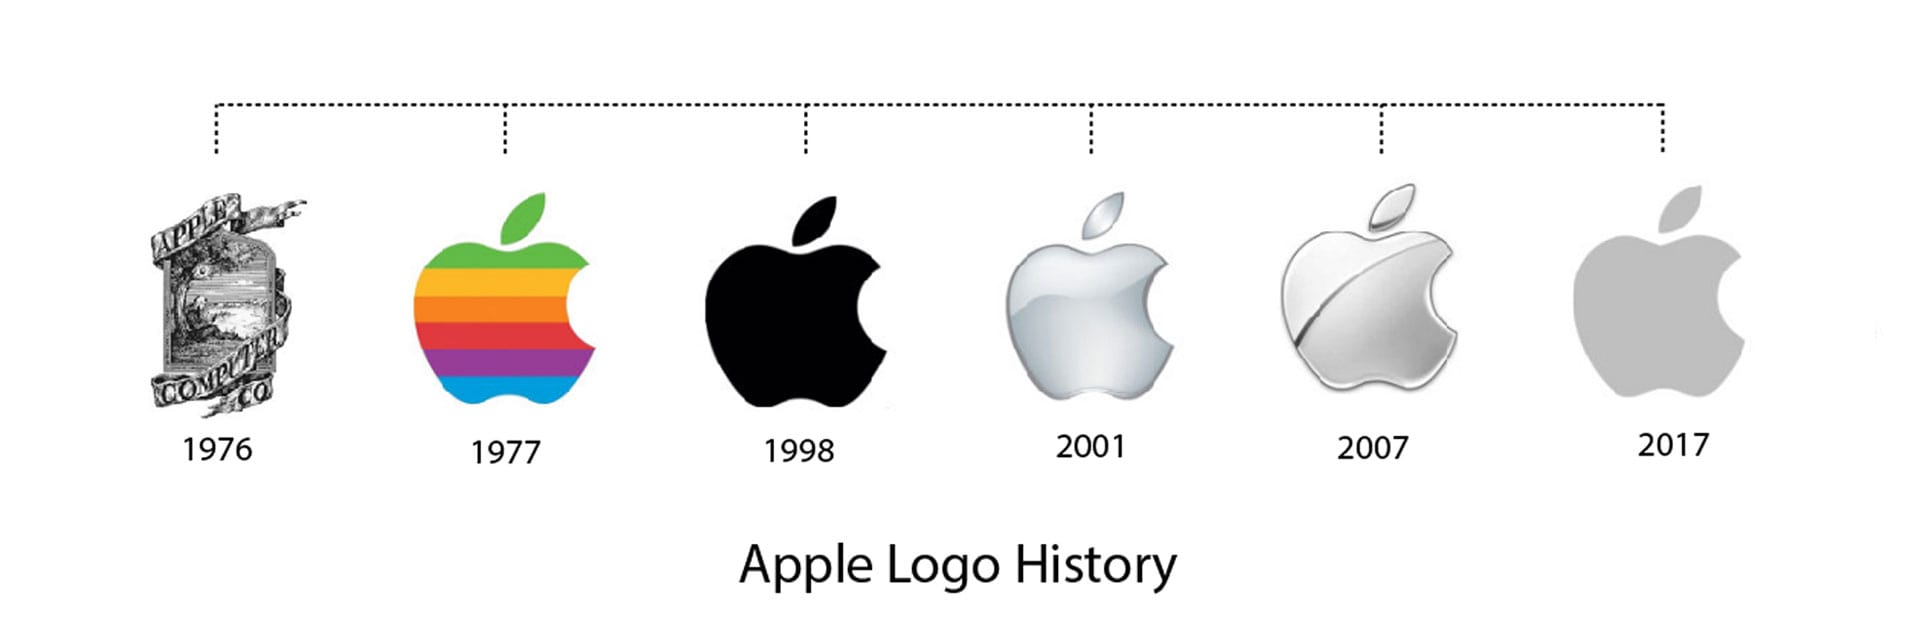 Logo apple ff